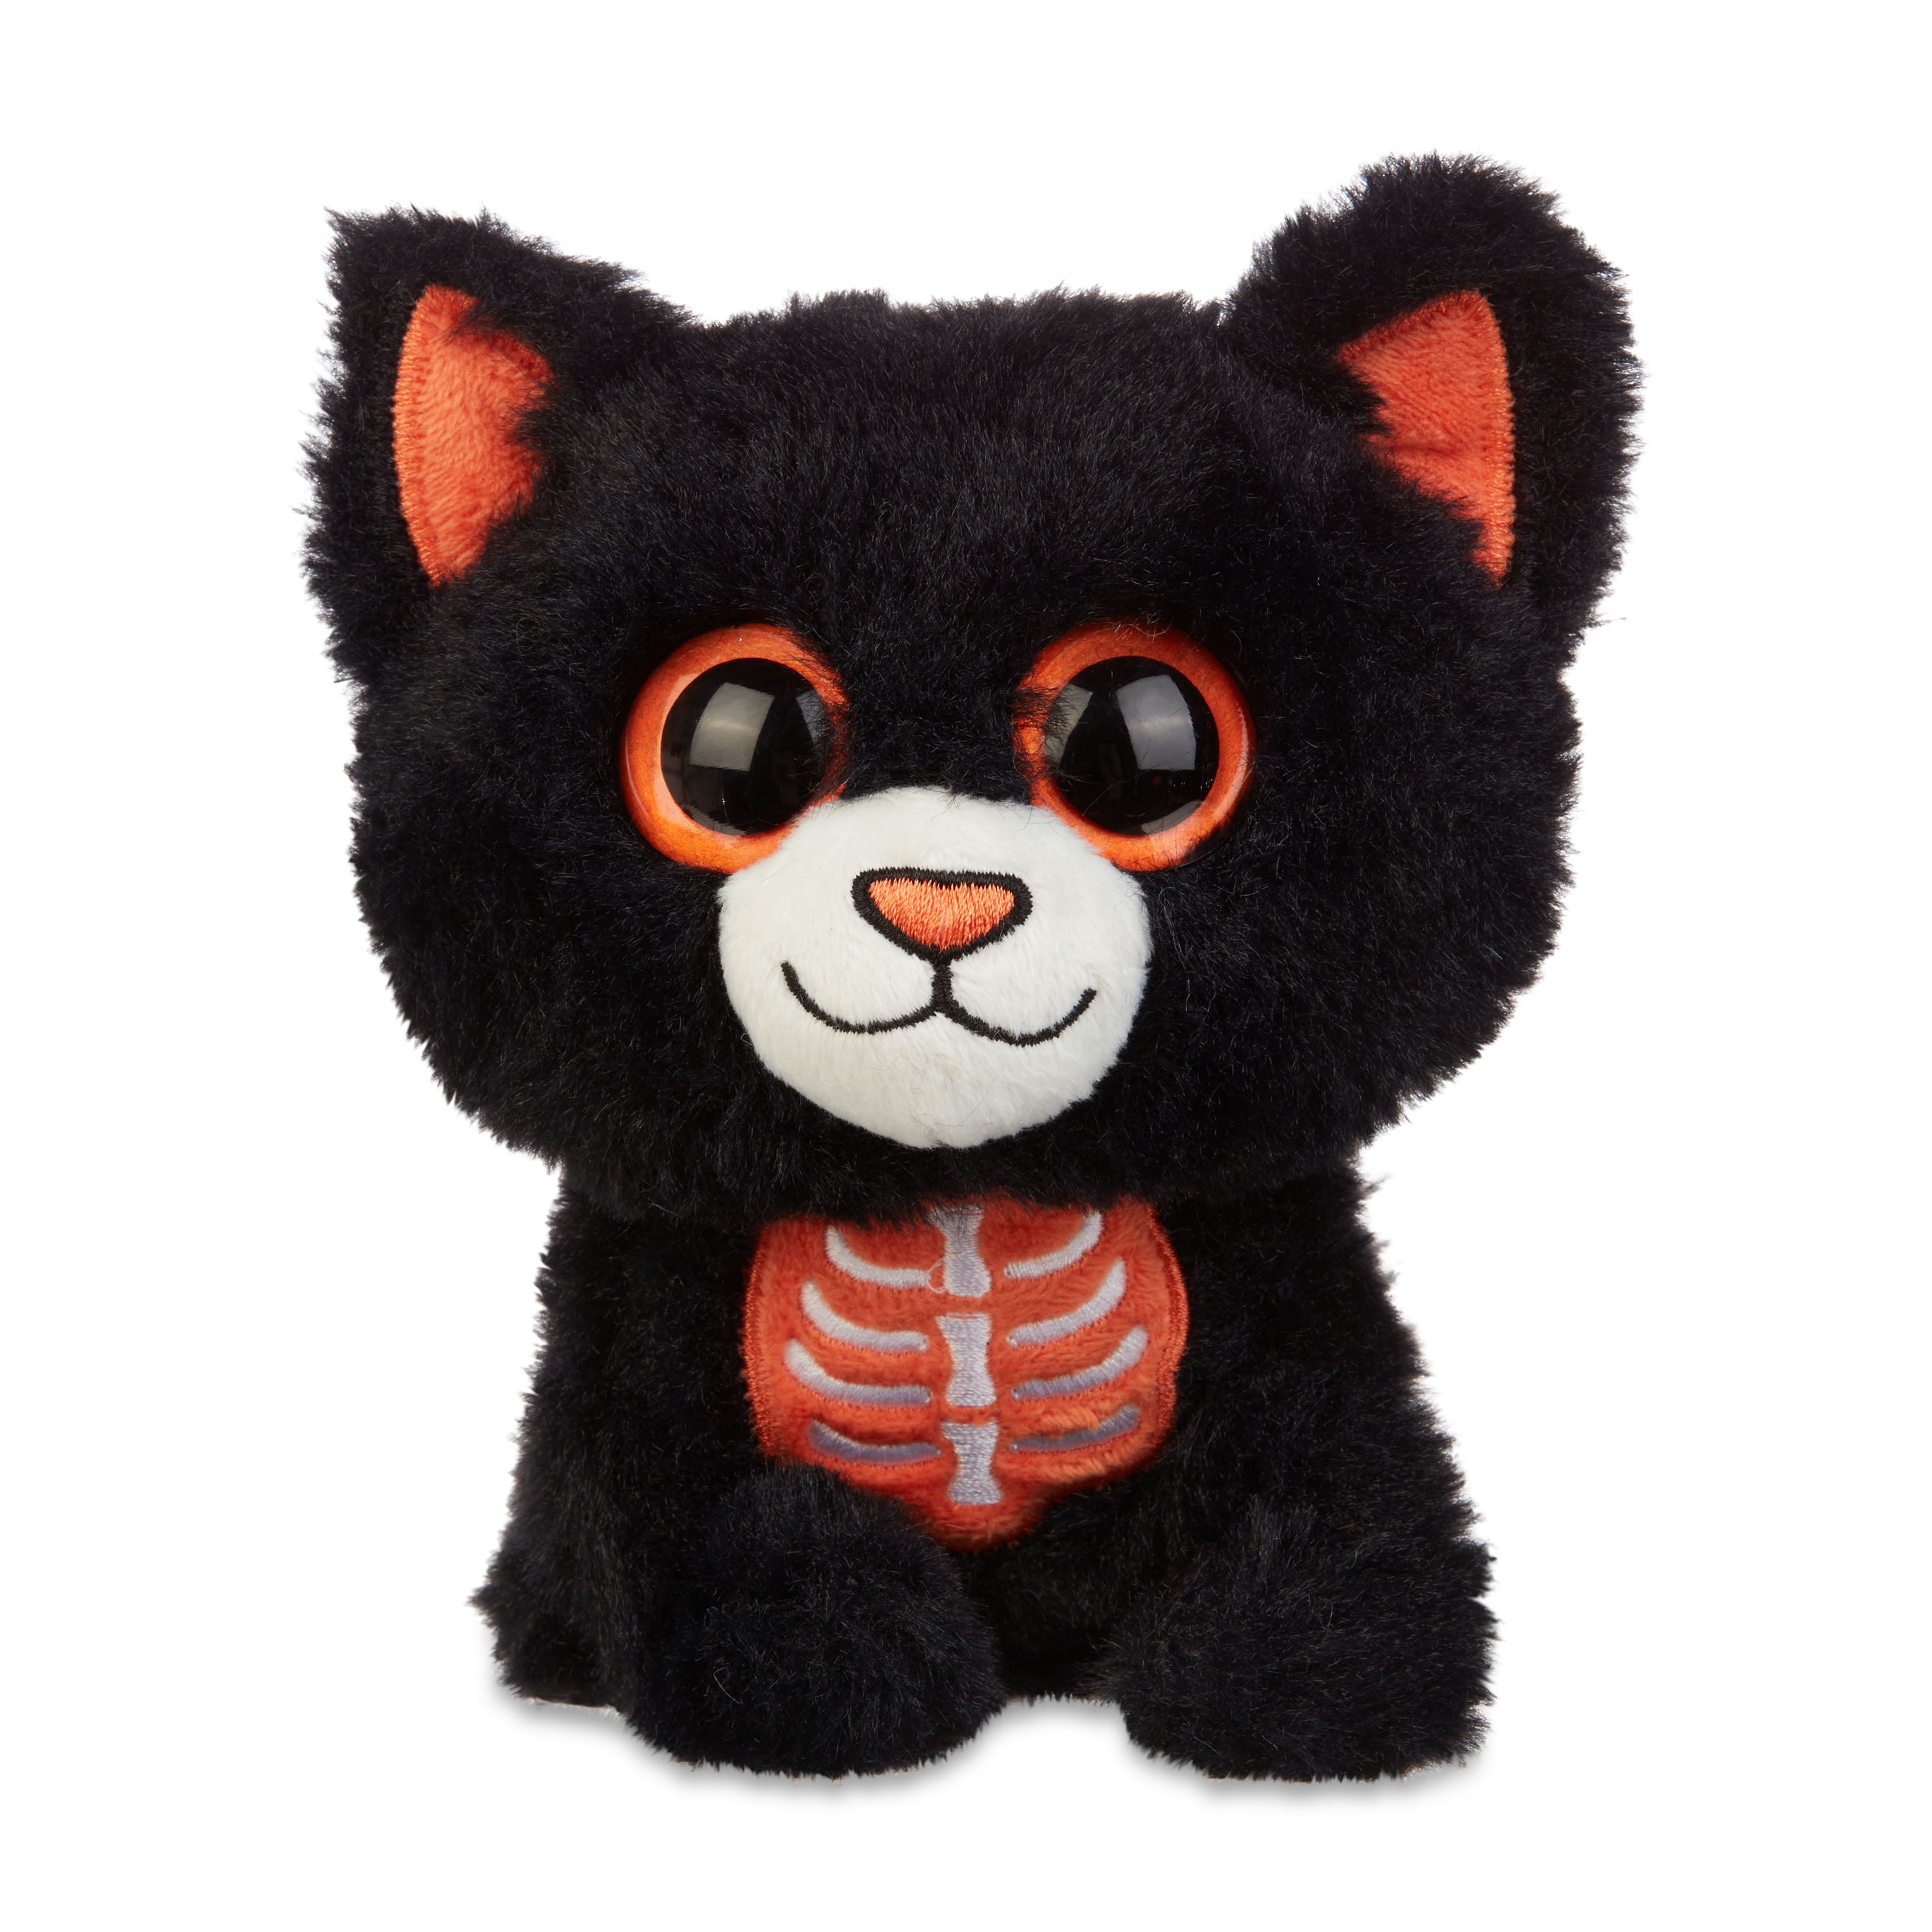 WAY TO CELEBRATE! Way to Celebrate Halloween Skeleton Plush Toy, Cat